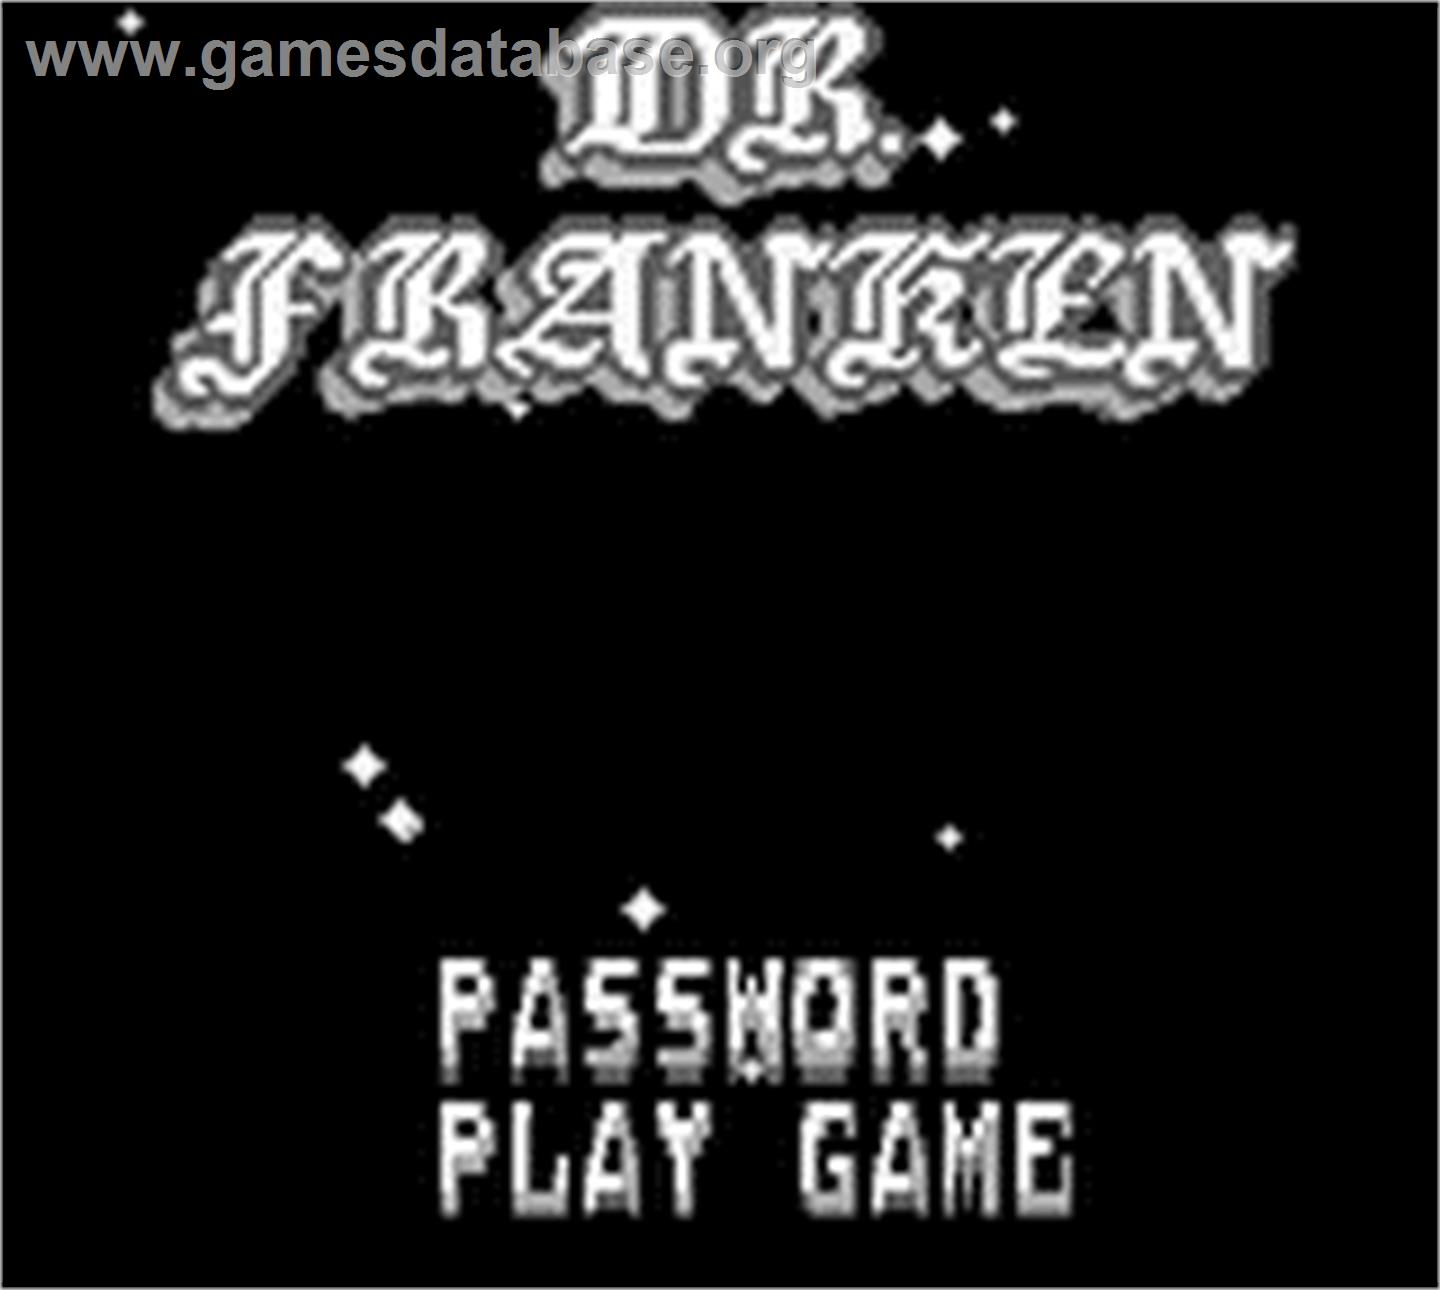 Dr. Franken 2 - Nintendo Game Boy - Artwork - Title Screen